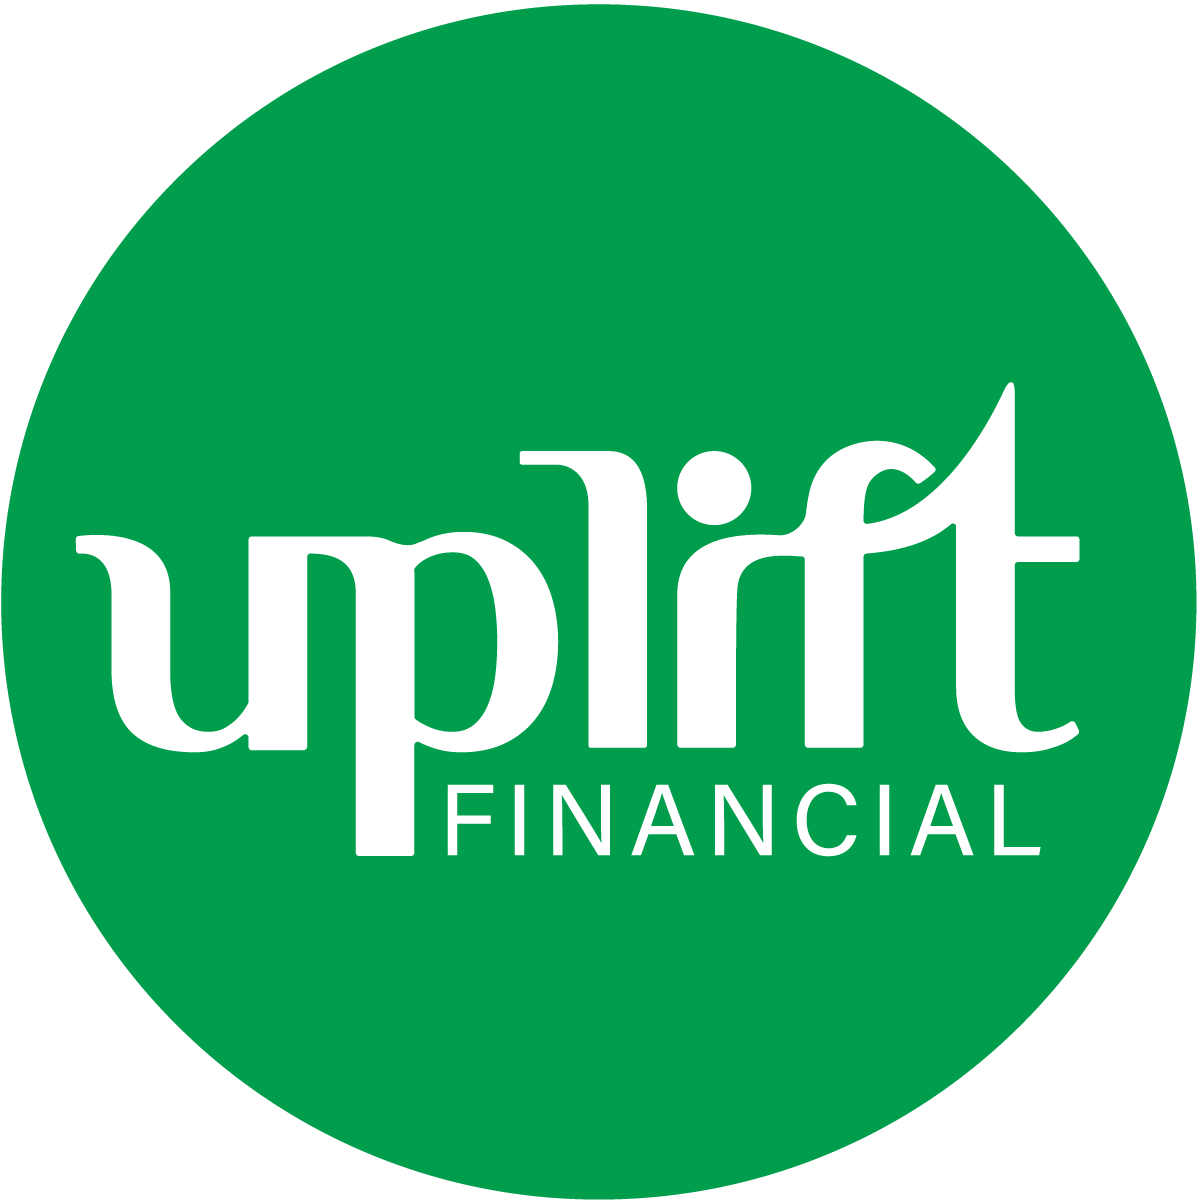 Uplift Financial